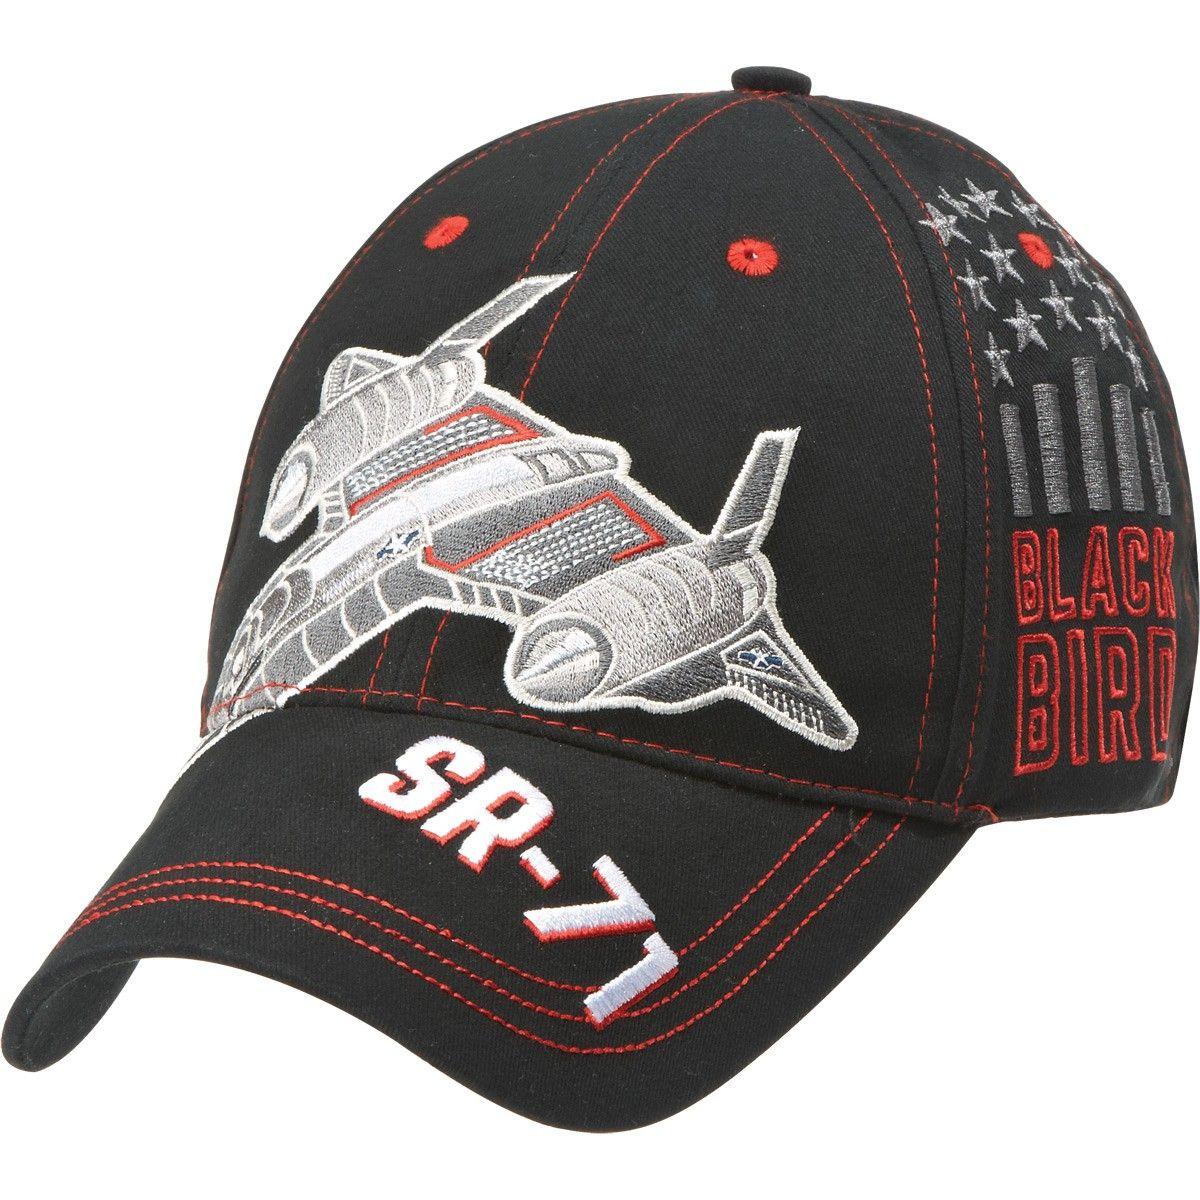 SR-71 Logo - SR-71 Blackbird Cap